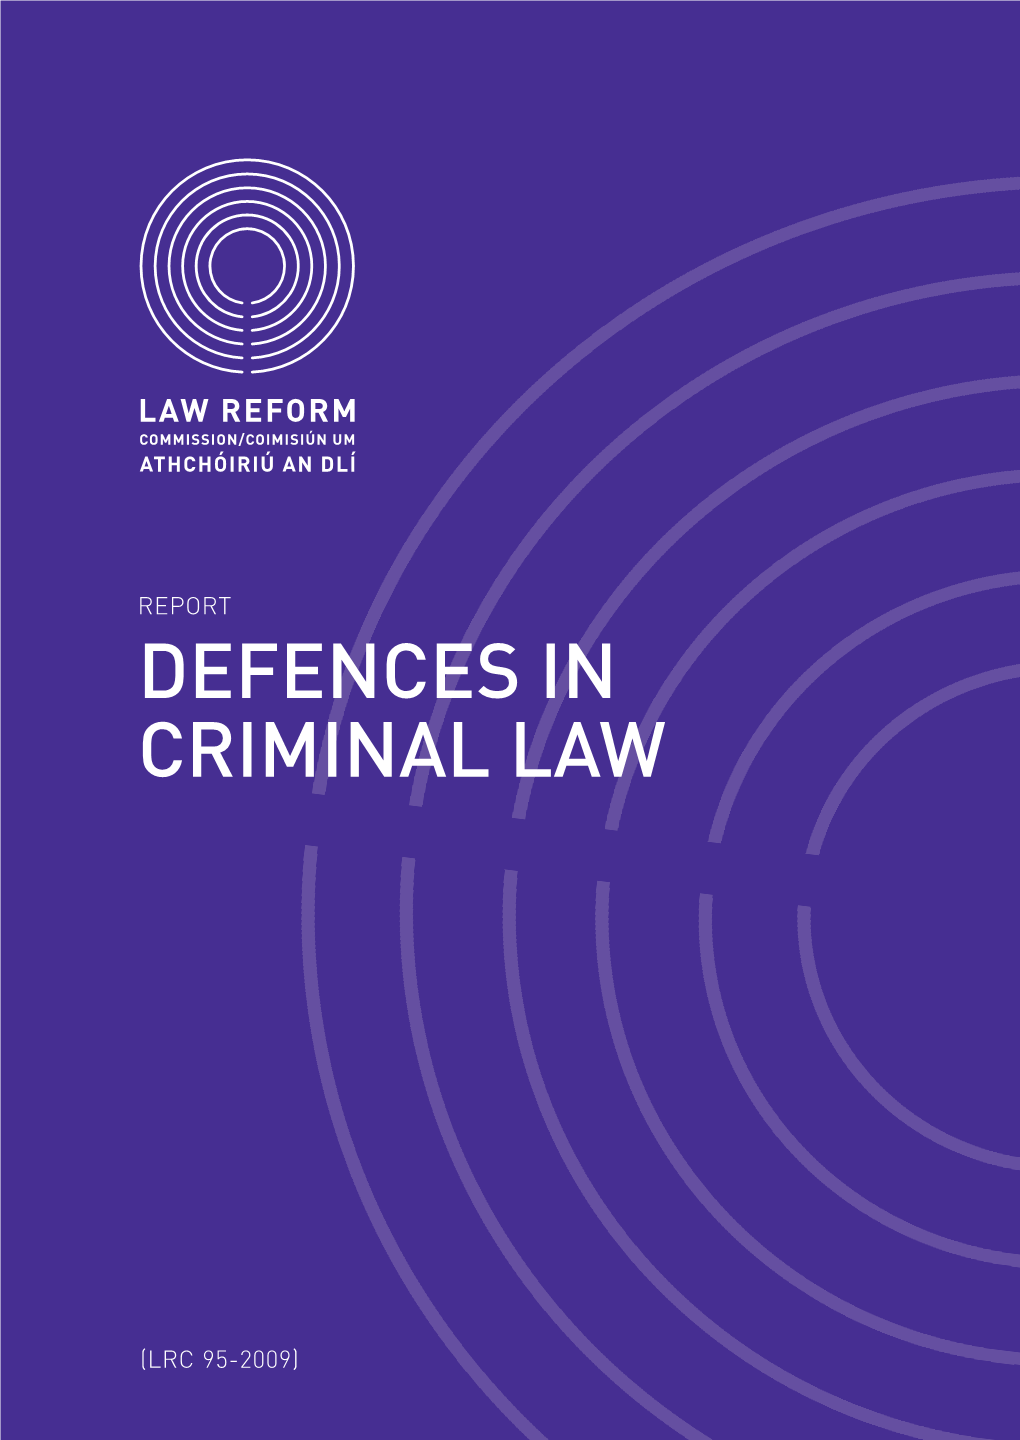 Report on Defences in Criminal